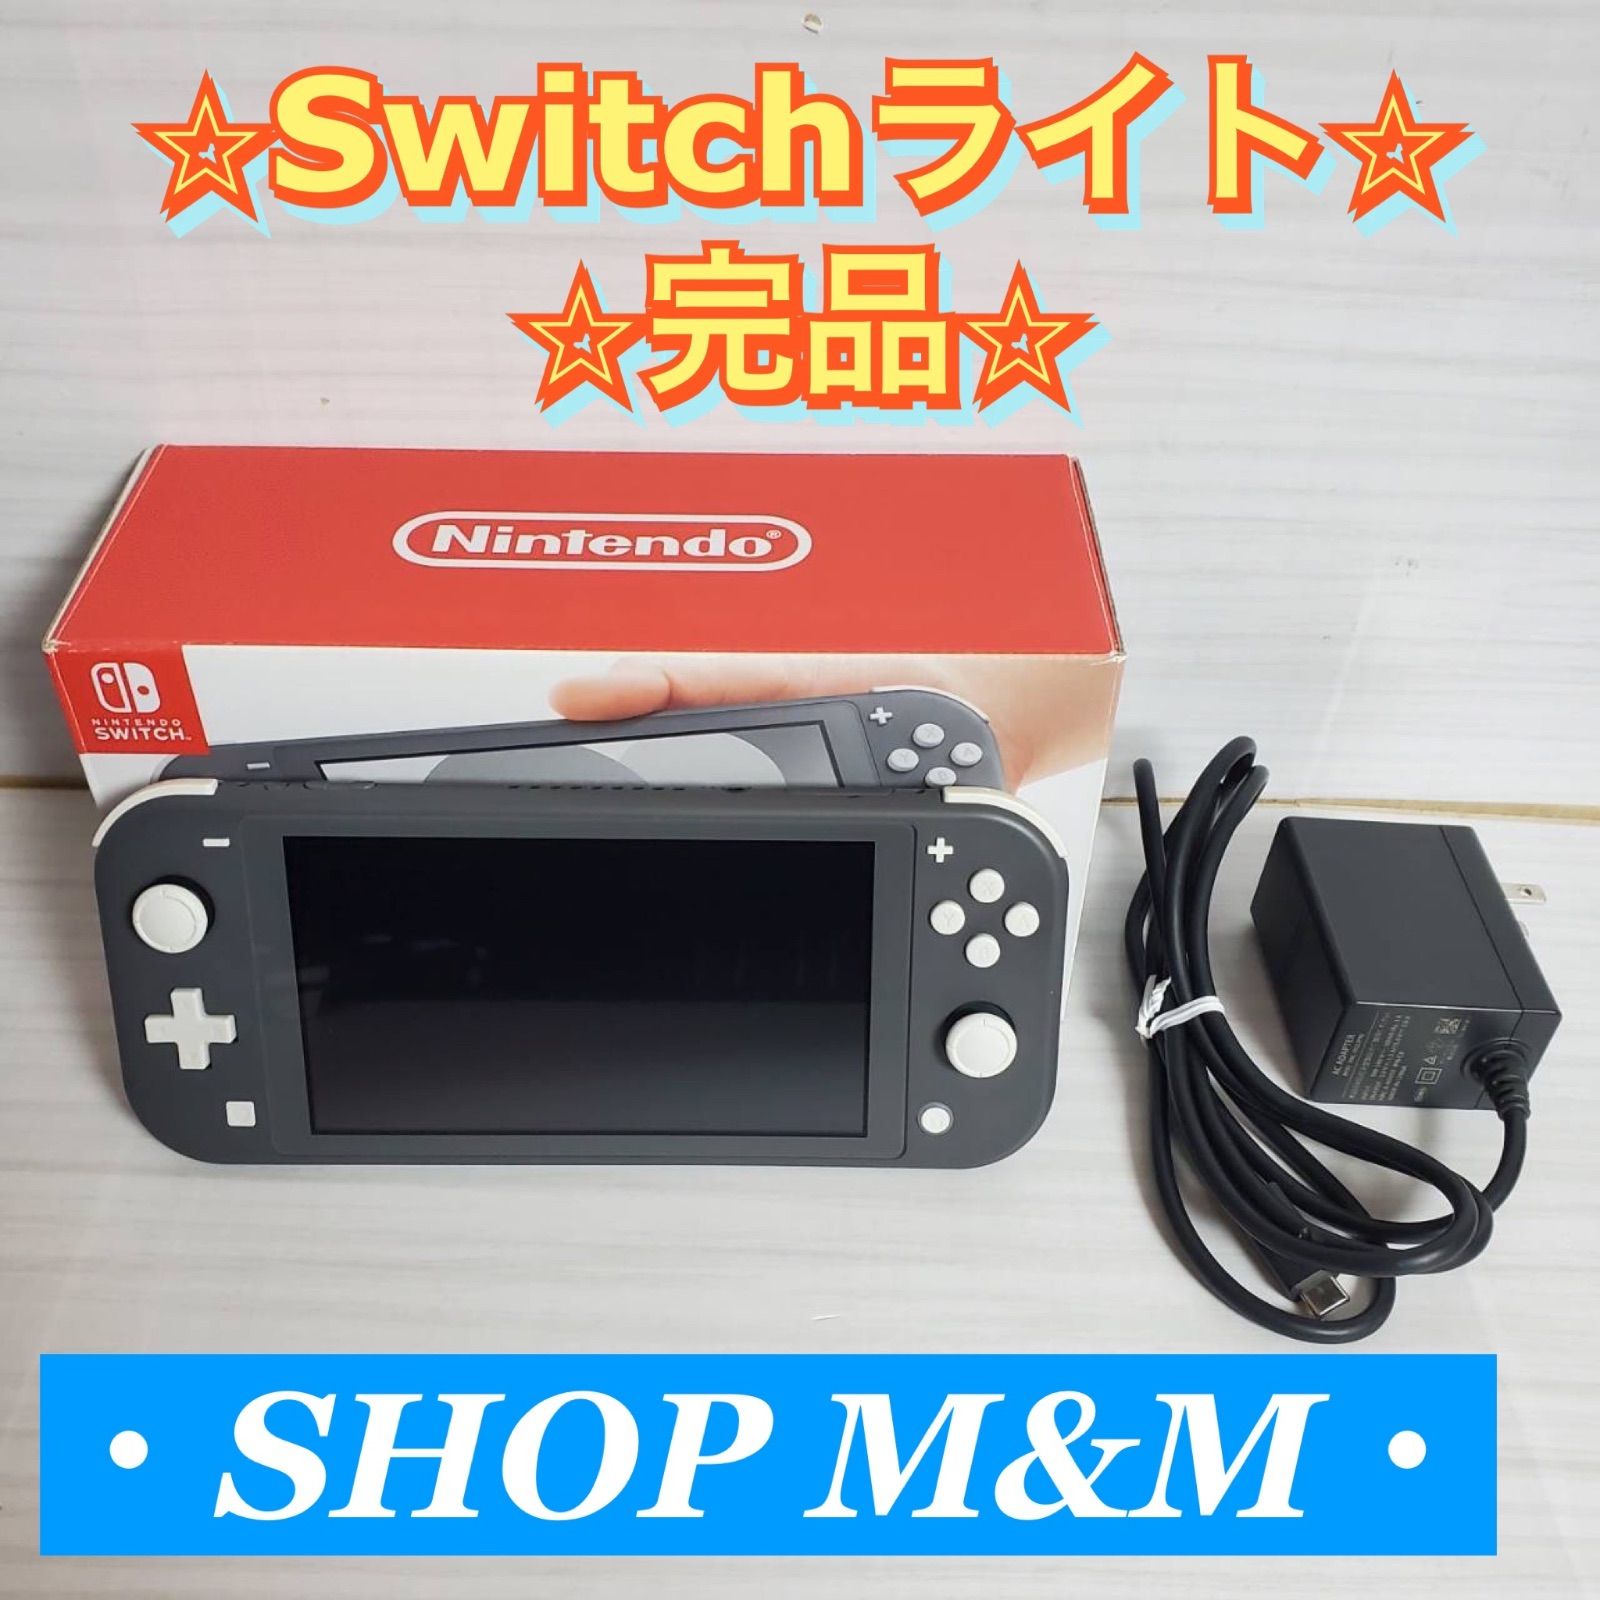 Nintendo Switch Lite 本体 グレー 充電アダプタ 箱あり - Nintendo Switch